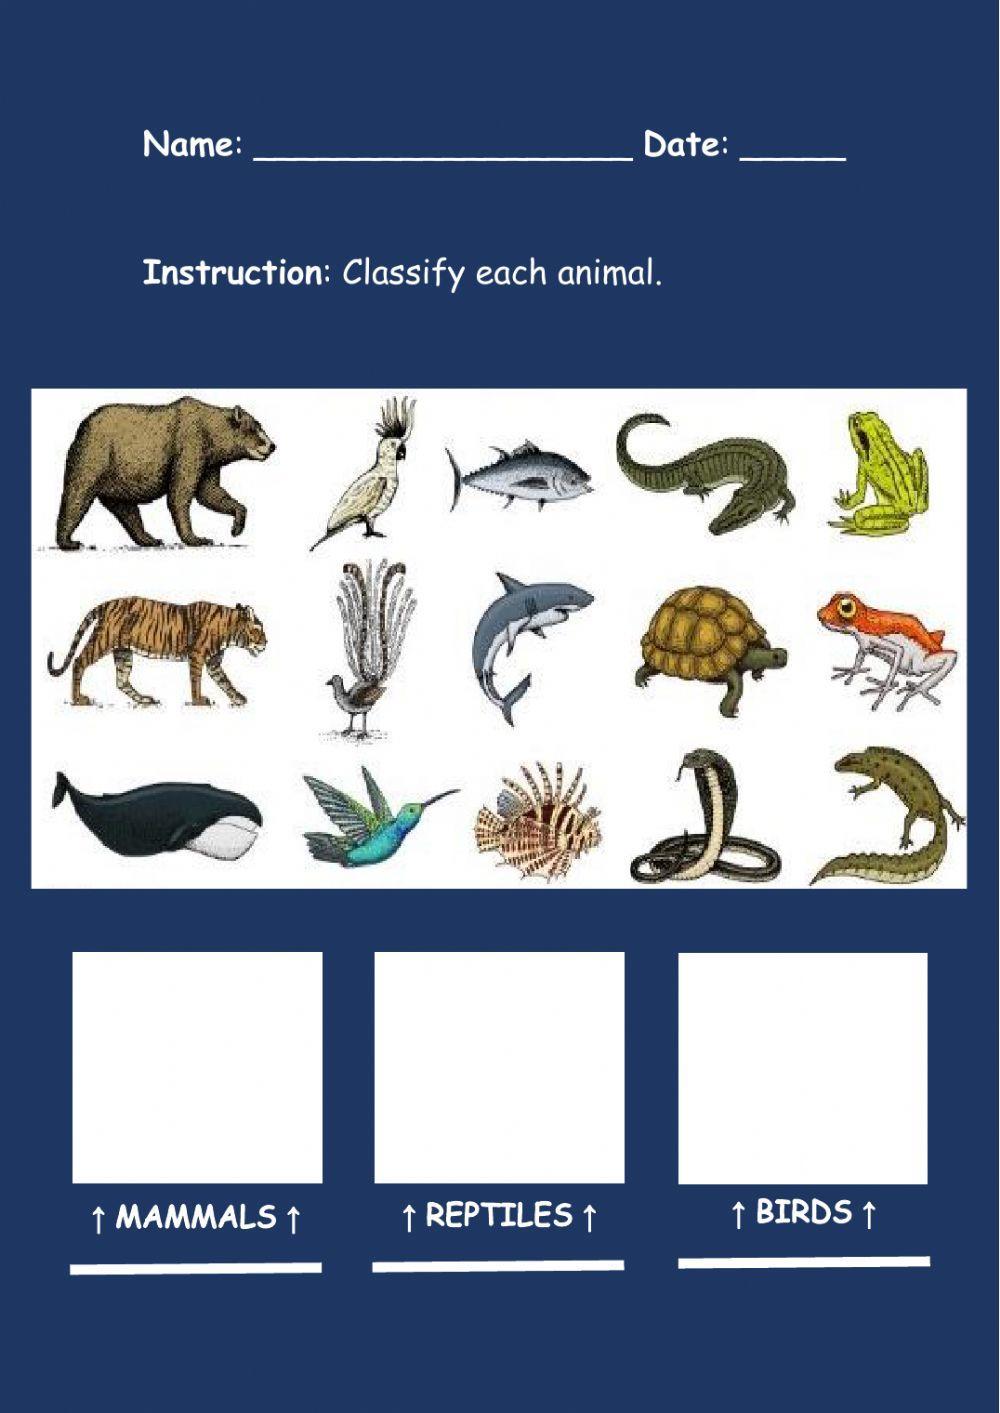 Mammals, reptiles, and birds